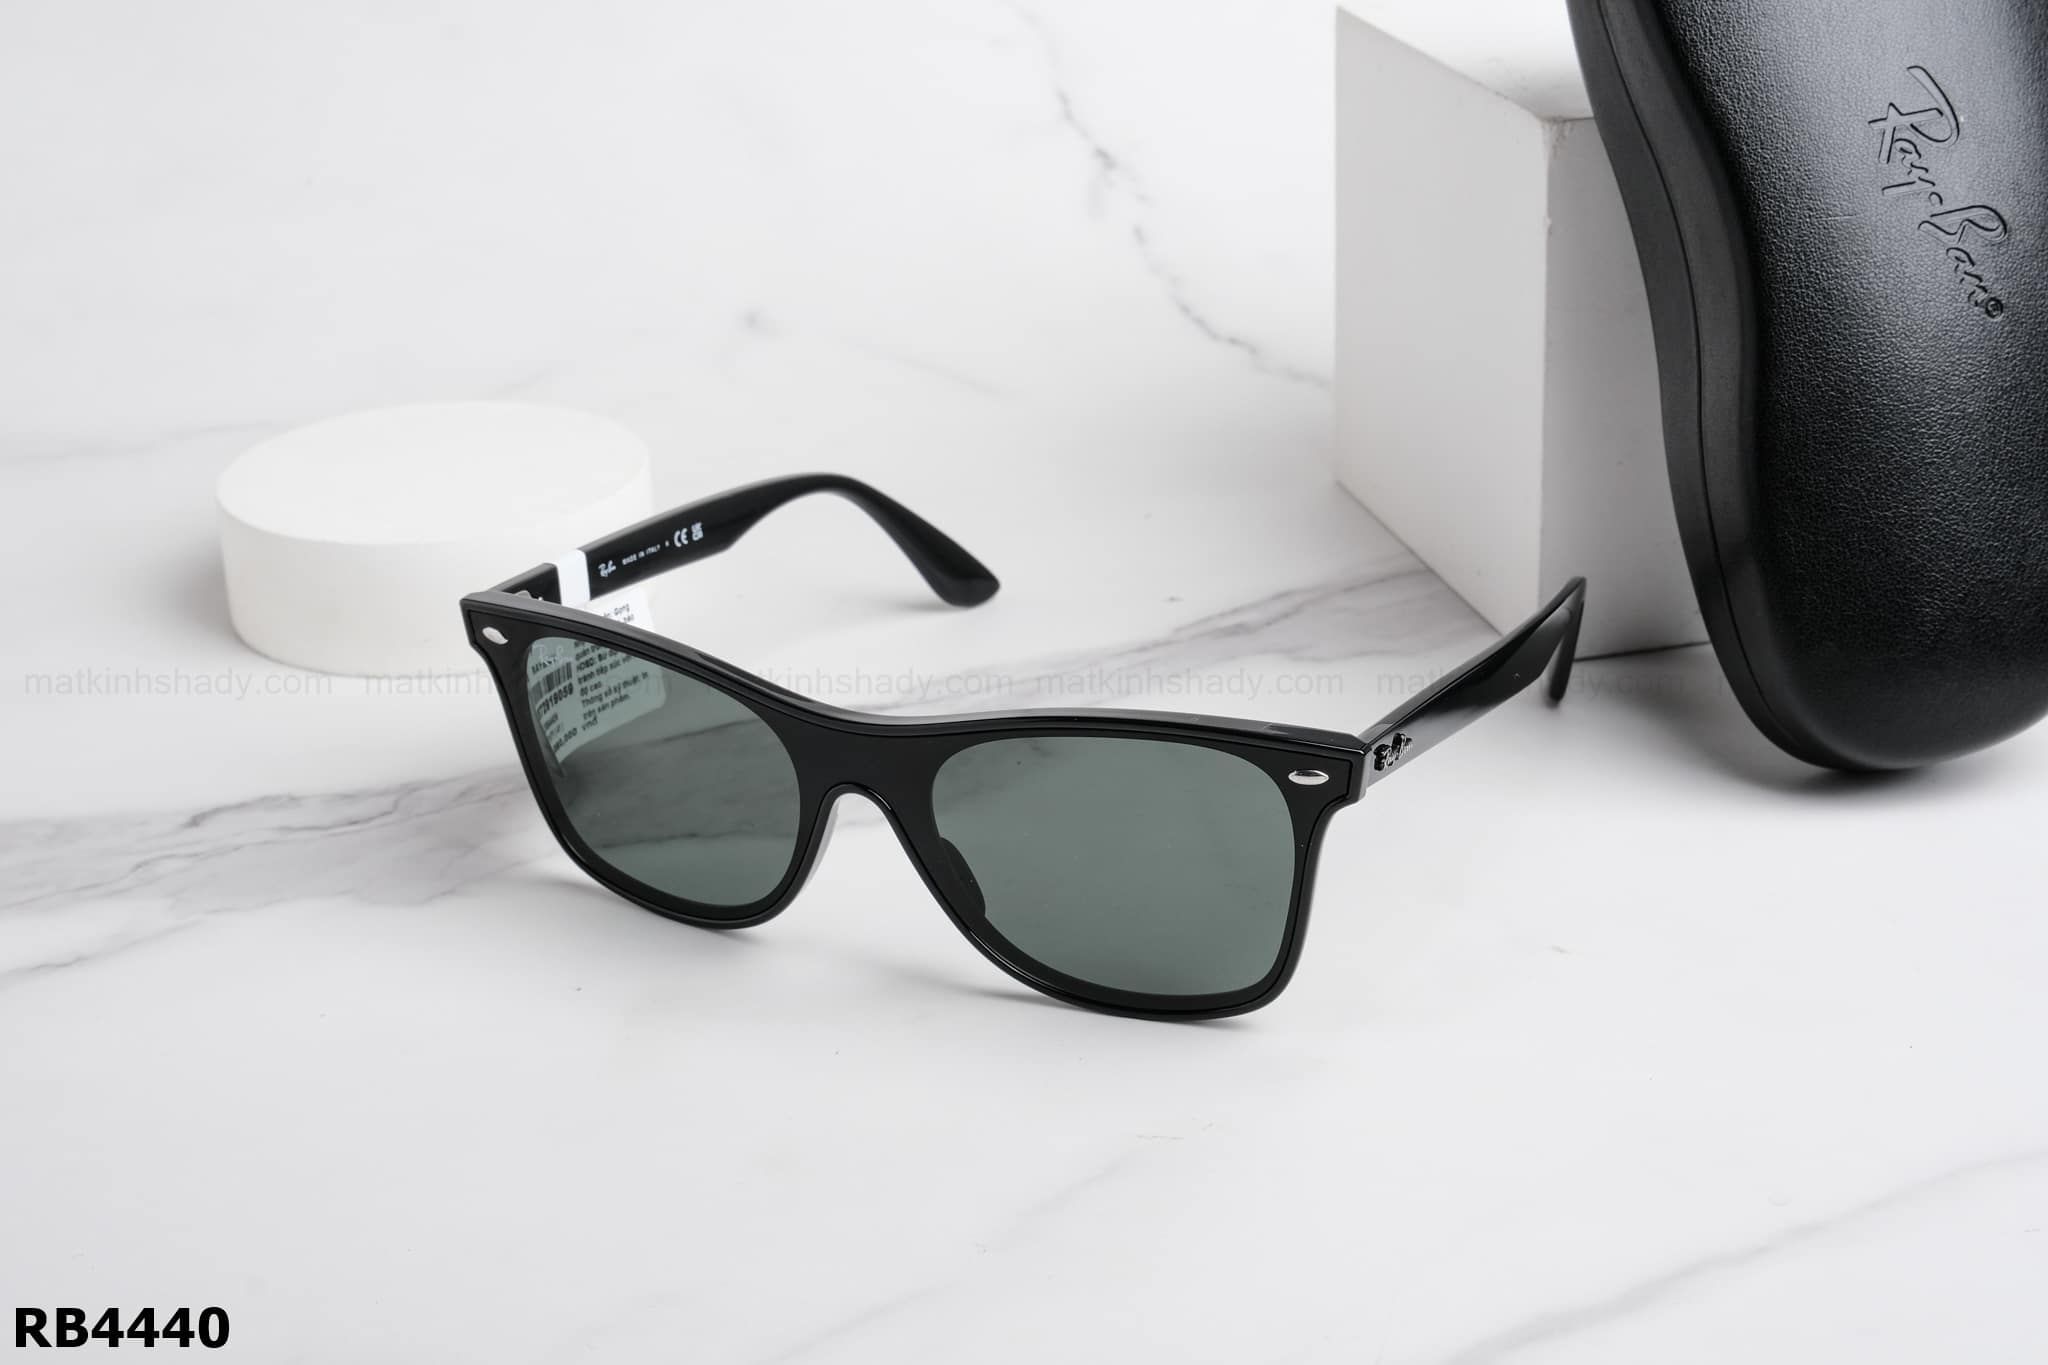  Rayban Eyewear - Sunglasses - RB4440 